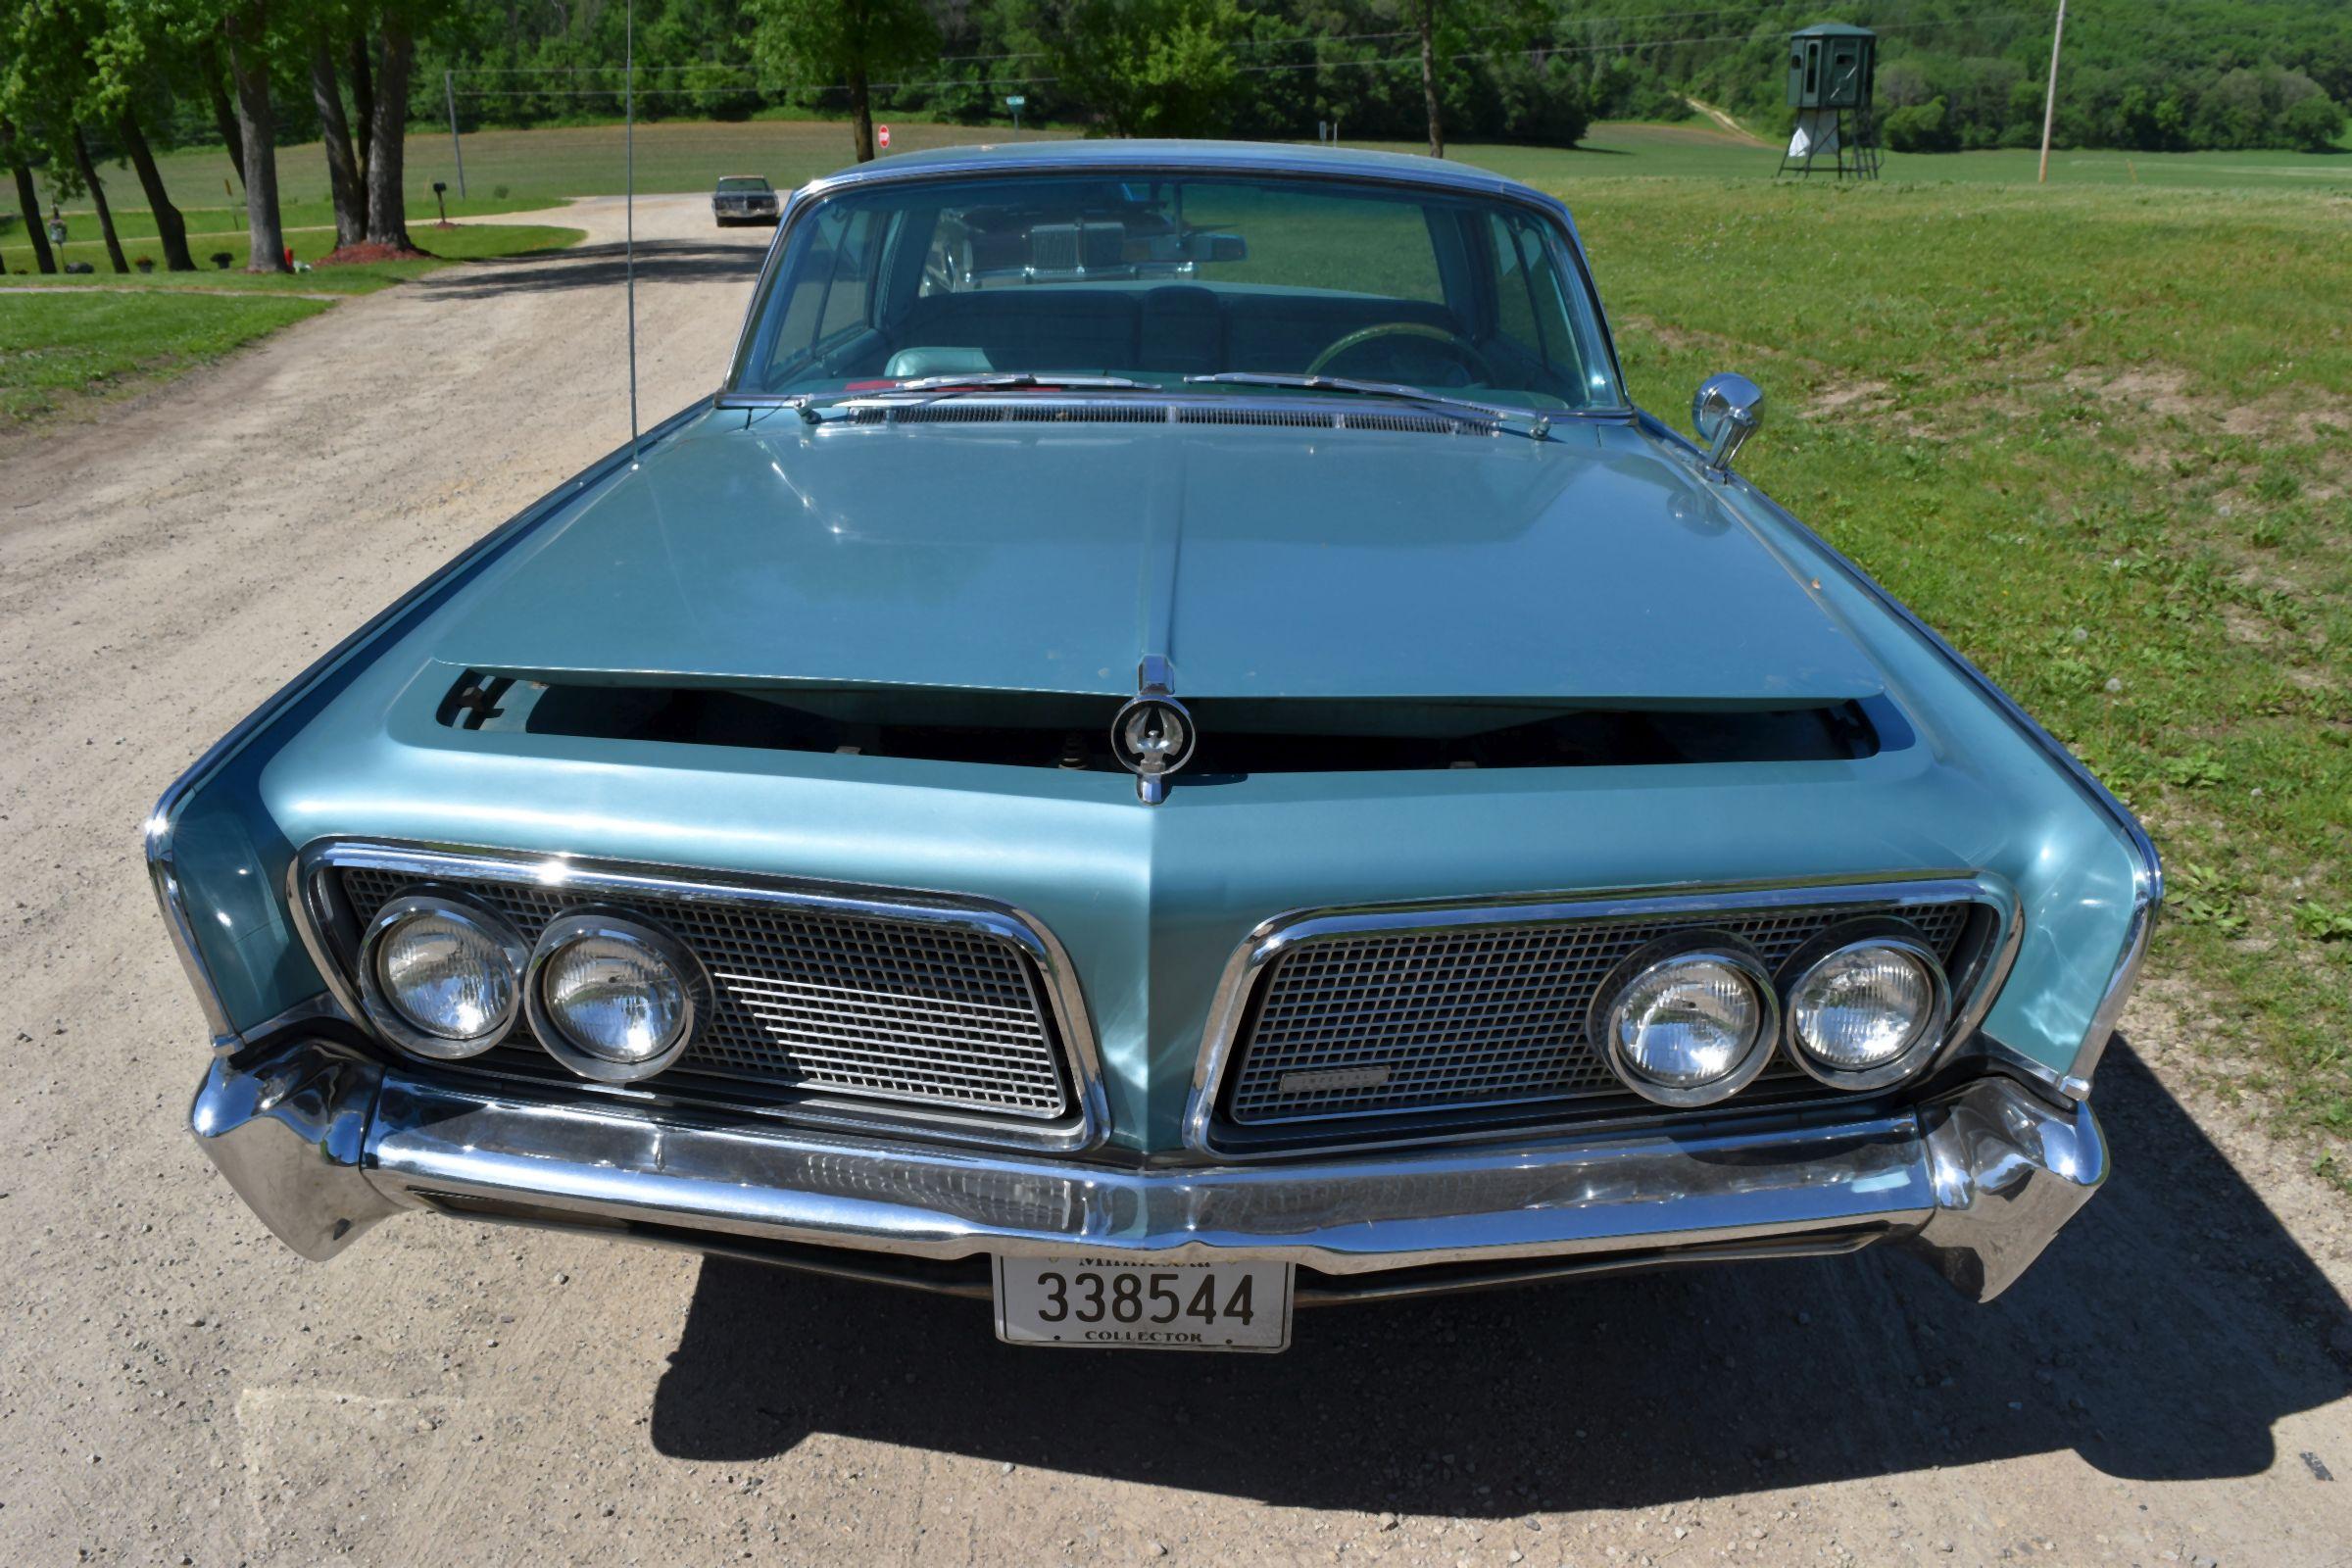 1964 Chrysler Imperial 4 Door Sedan, 92,877 Original Miles, 413ci Engine, Push Button Transmission,